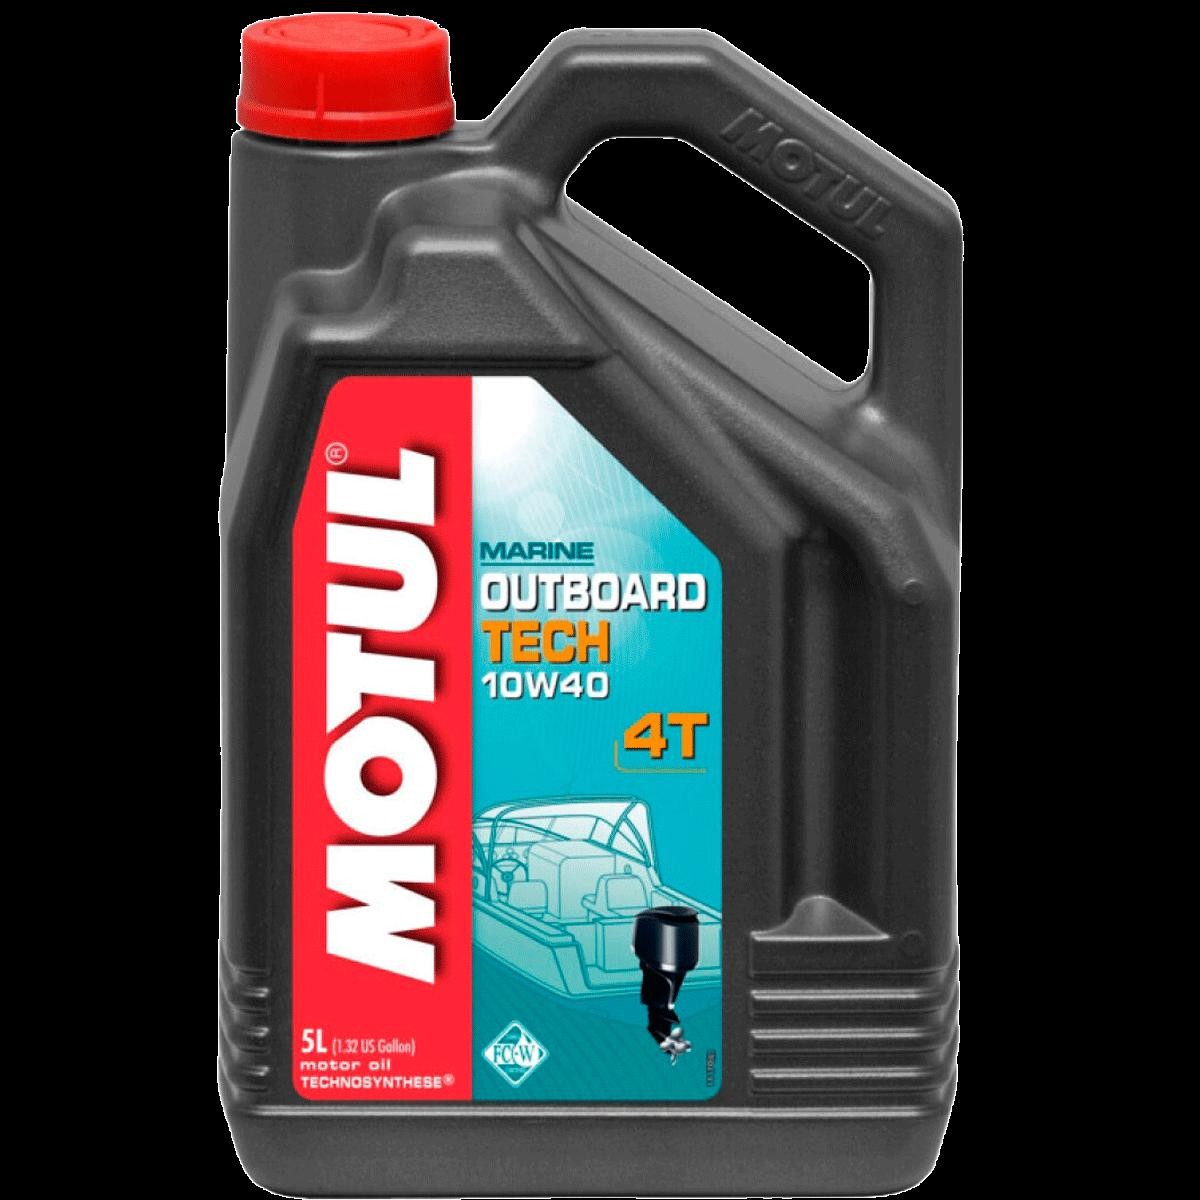 Car oil API SJ MOTUL - 106354 OUTBOARD TECH, 4T